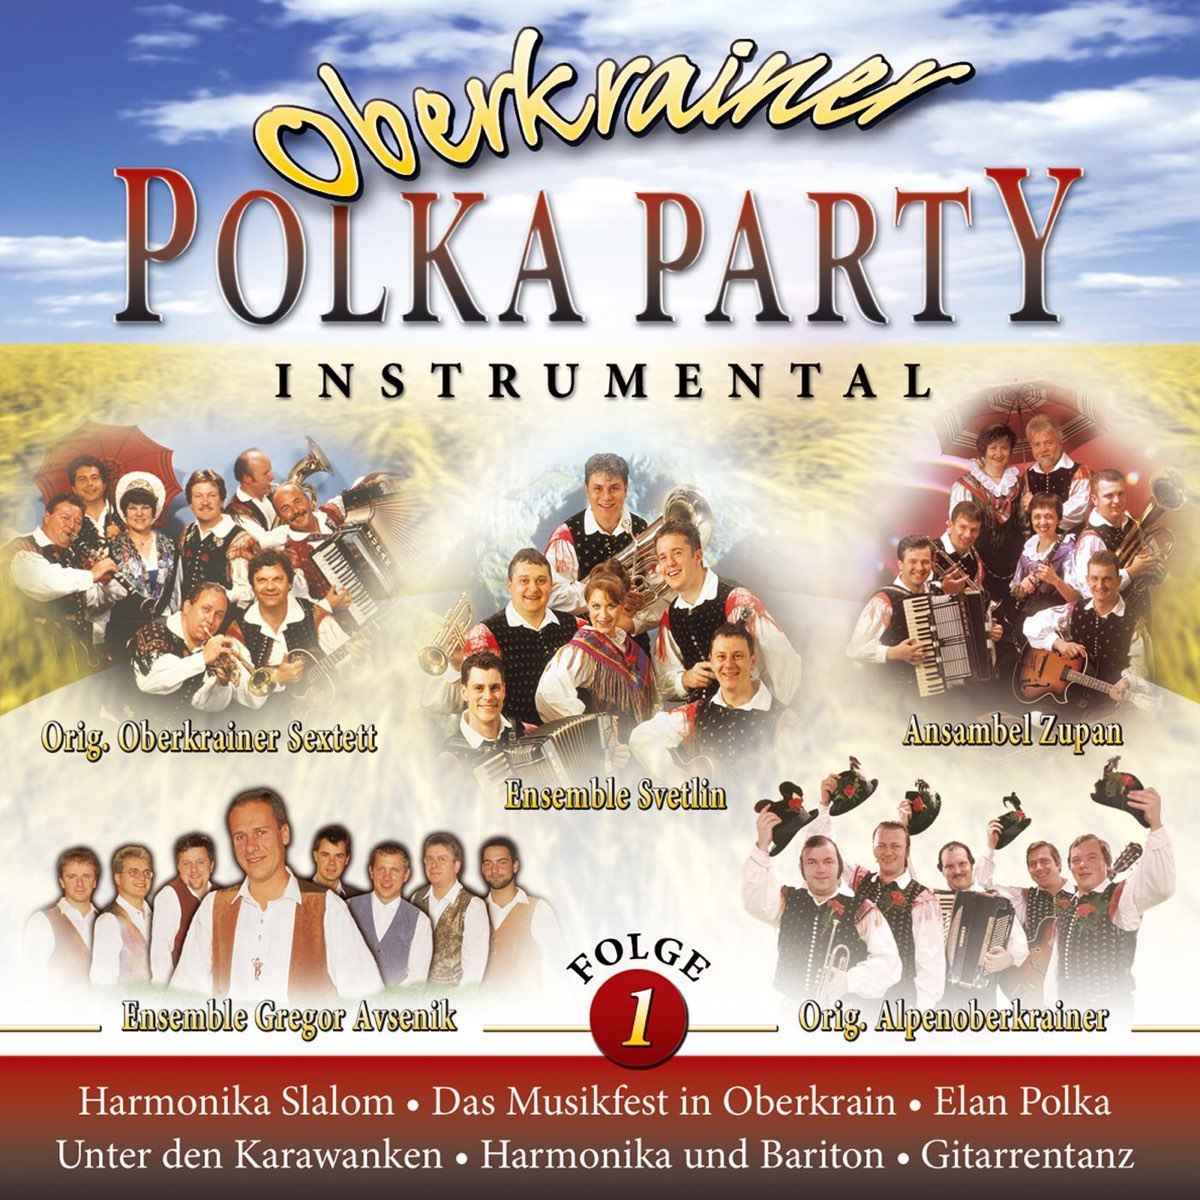 Oberkrainer Polka Party Instrumental, Folge 1 - Album by Various Artists -  Apple Music